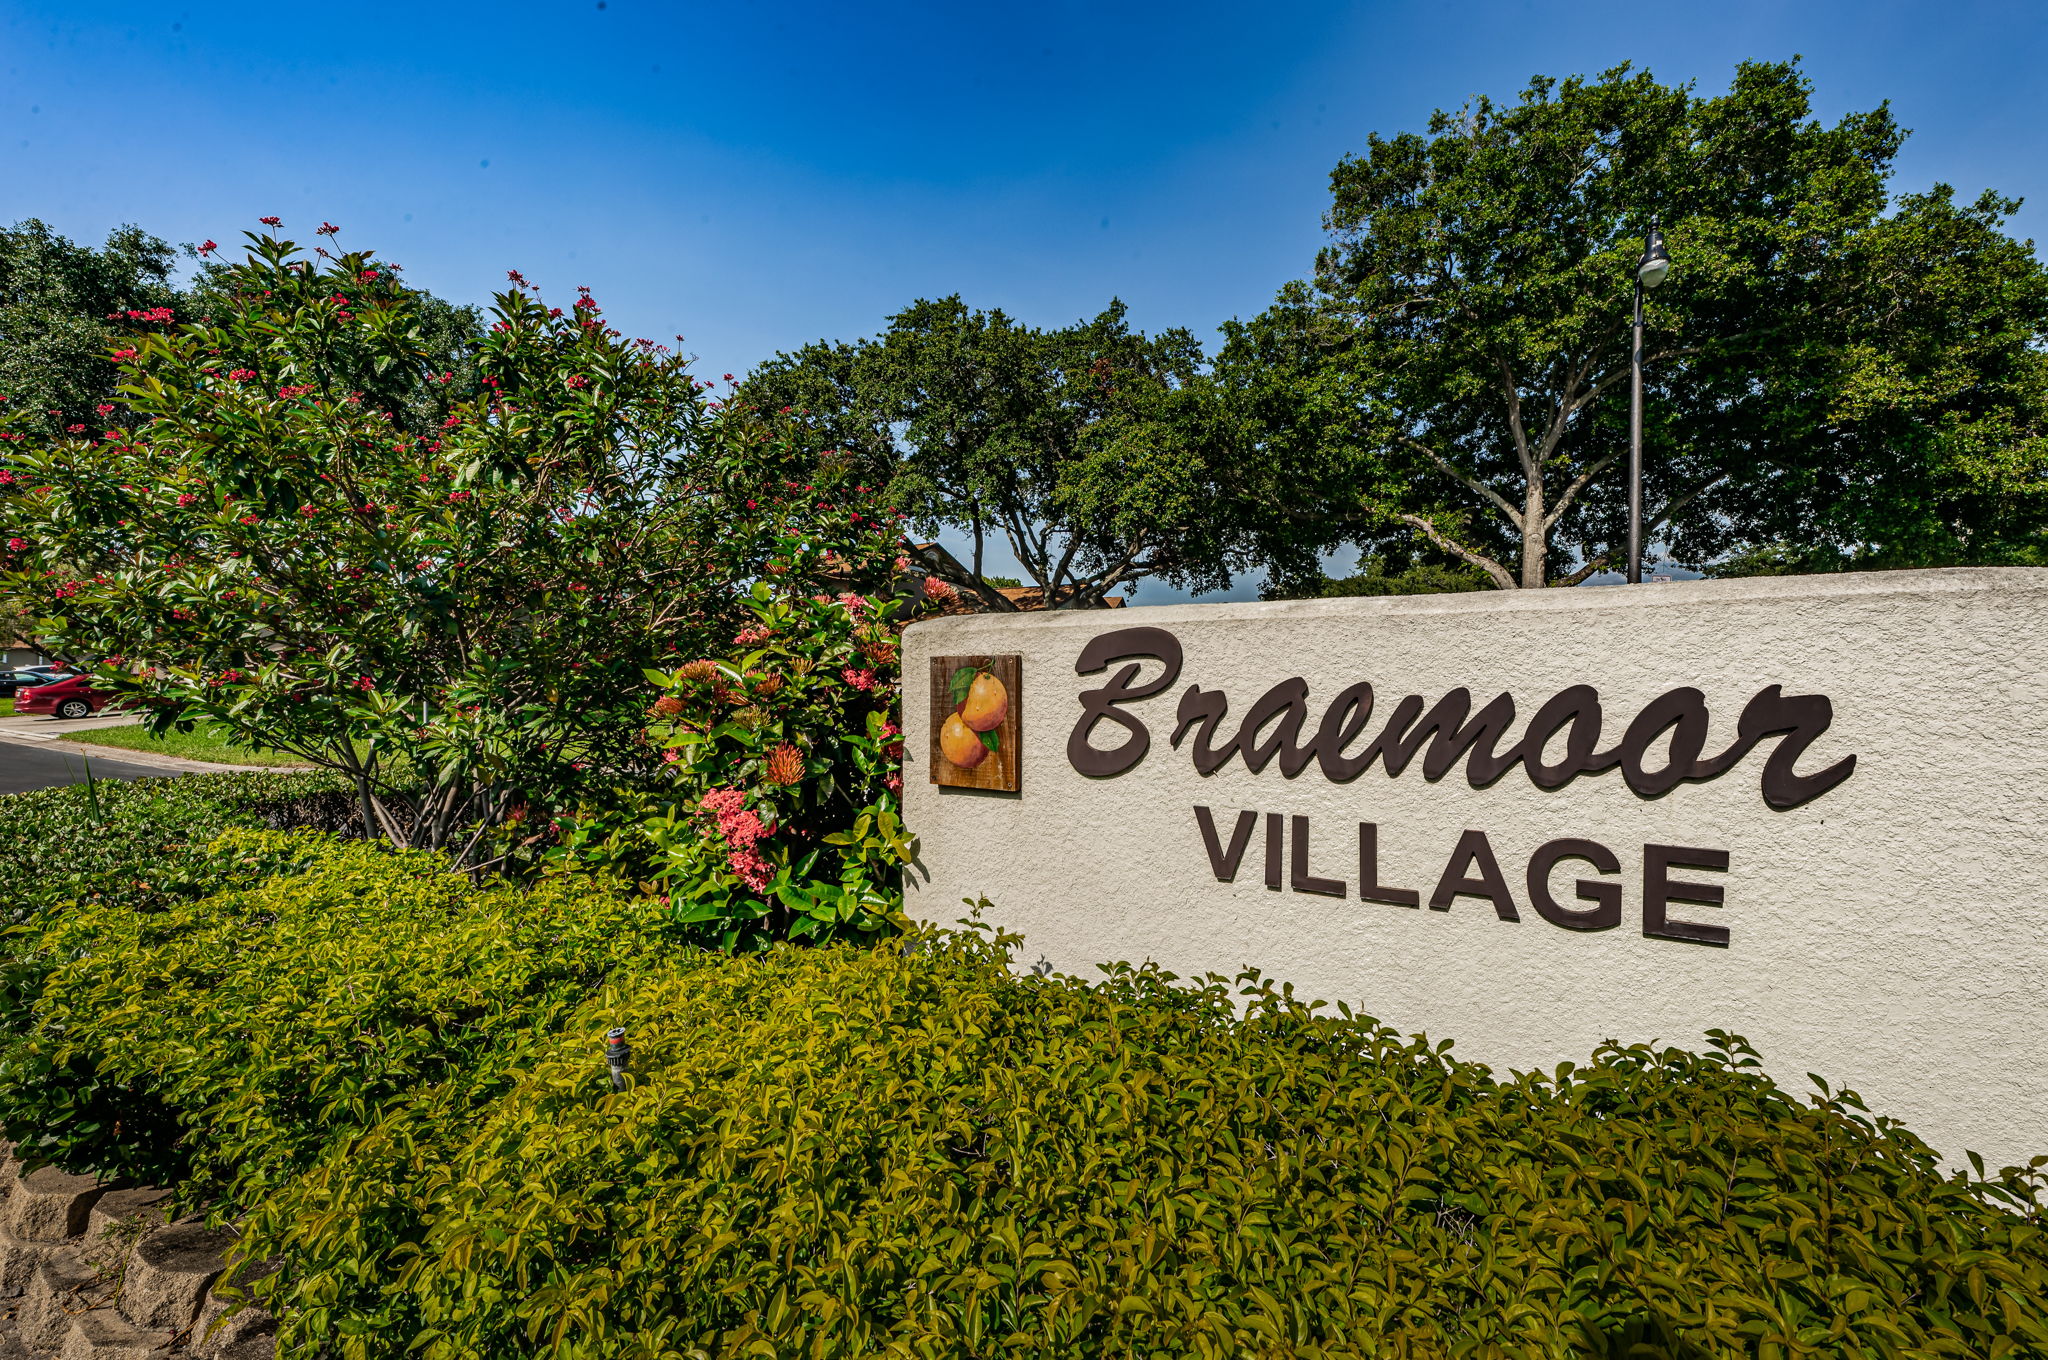 46-Braemoor Village